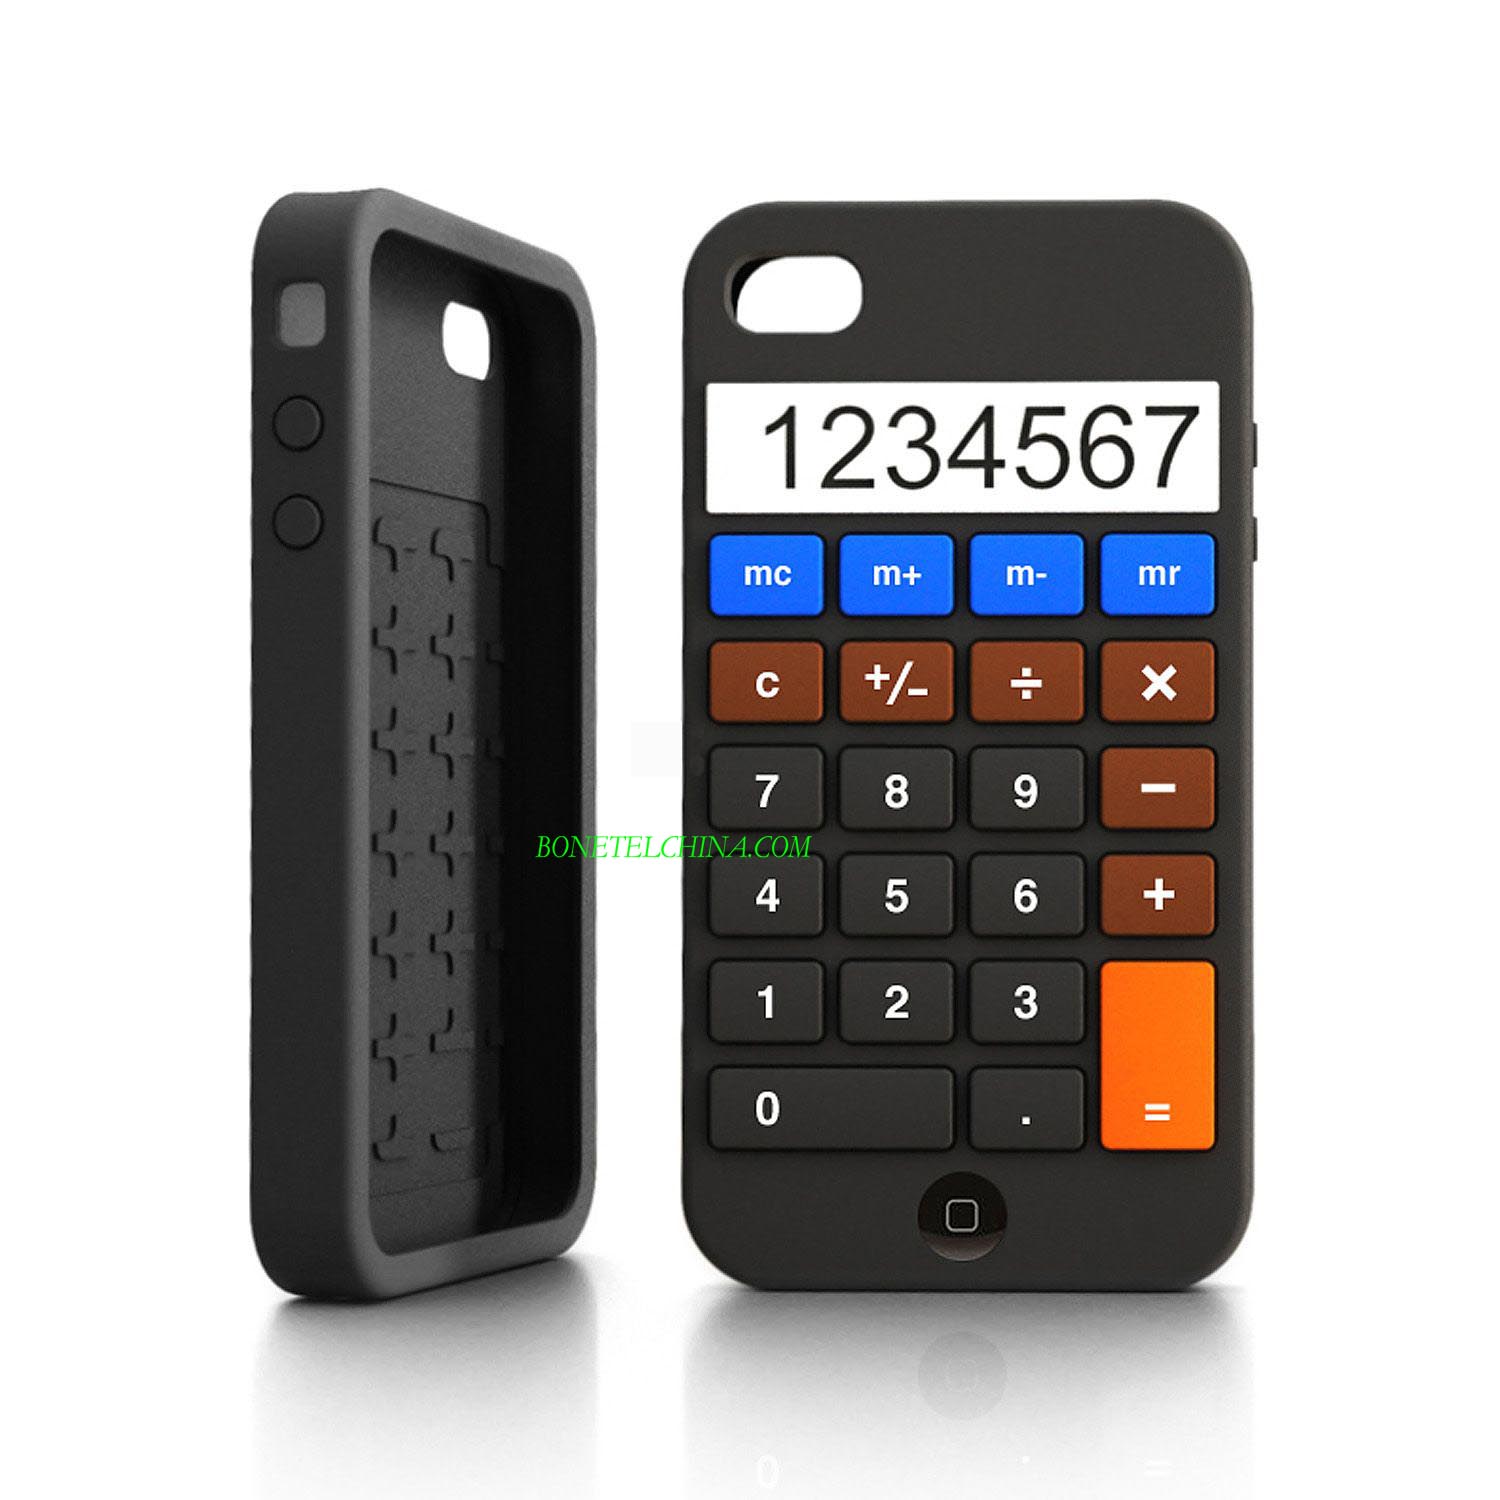 Calculator design cases for iPhone 4 / 4S